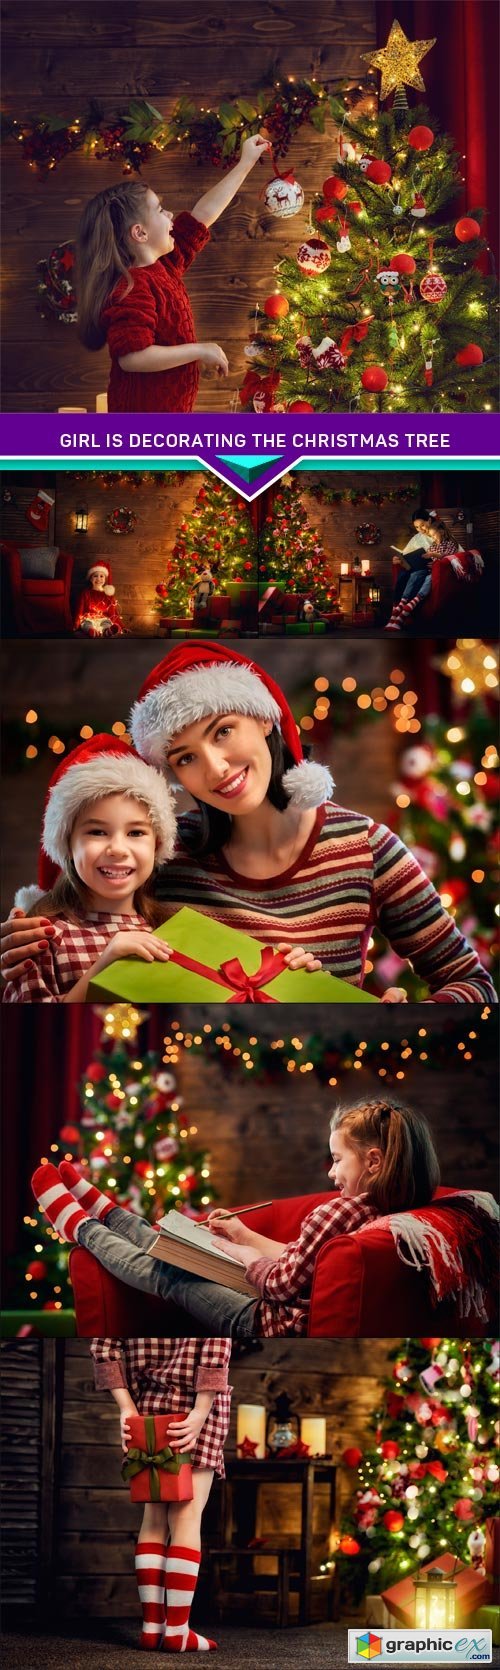 Girl is decorating the Christmas tree 6X JPEG